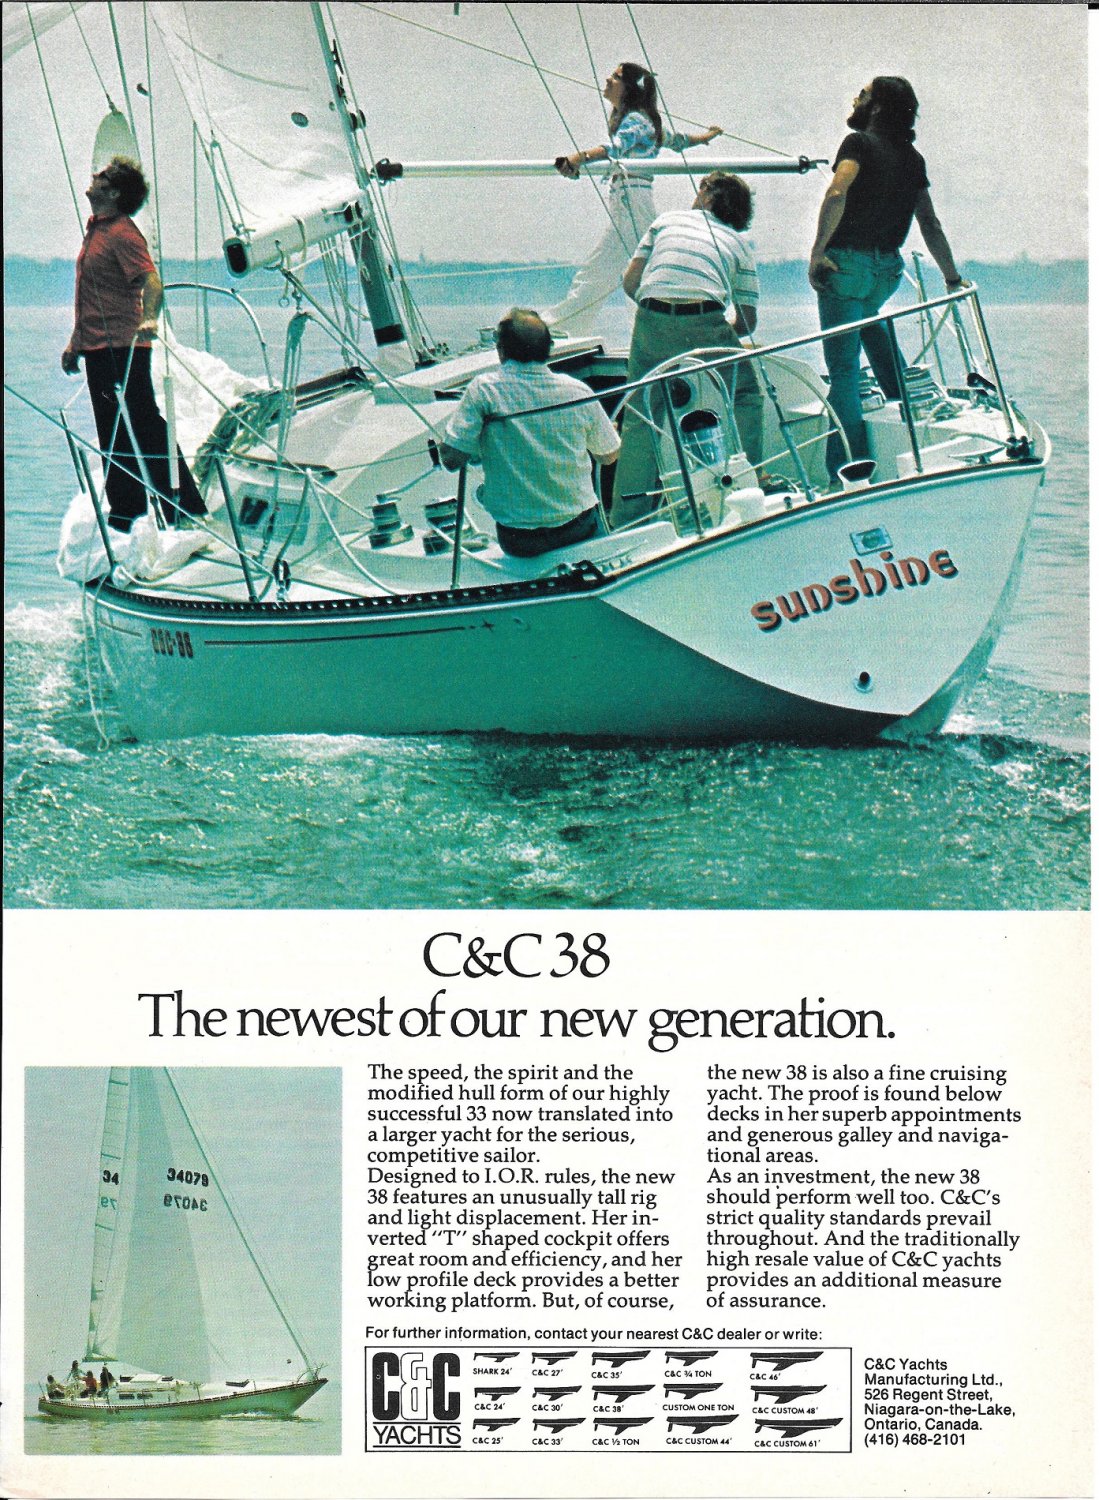 1975 C & C 38 Yacht Color Ad- Nice Photo of "Sunshine"